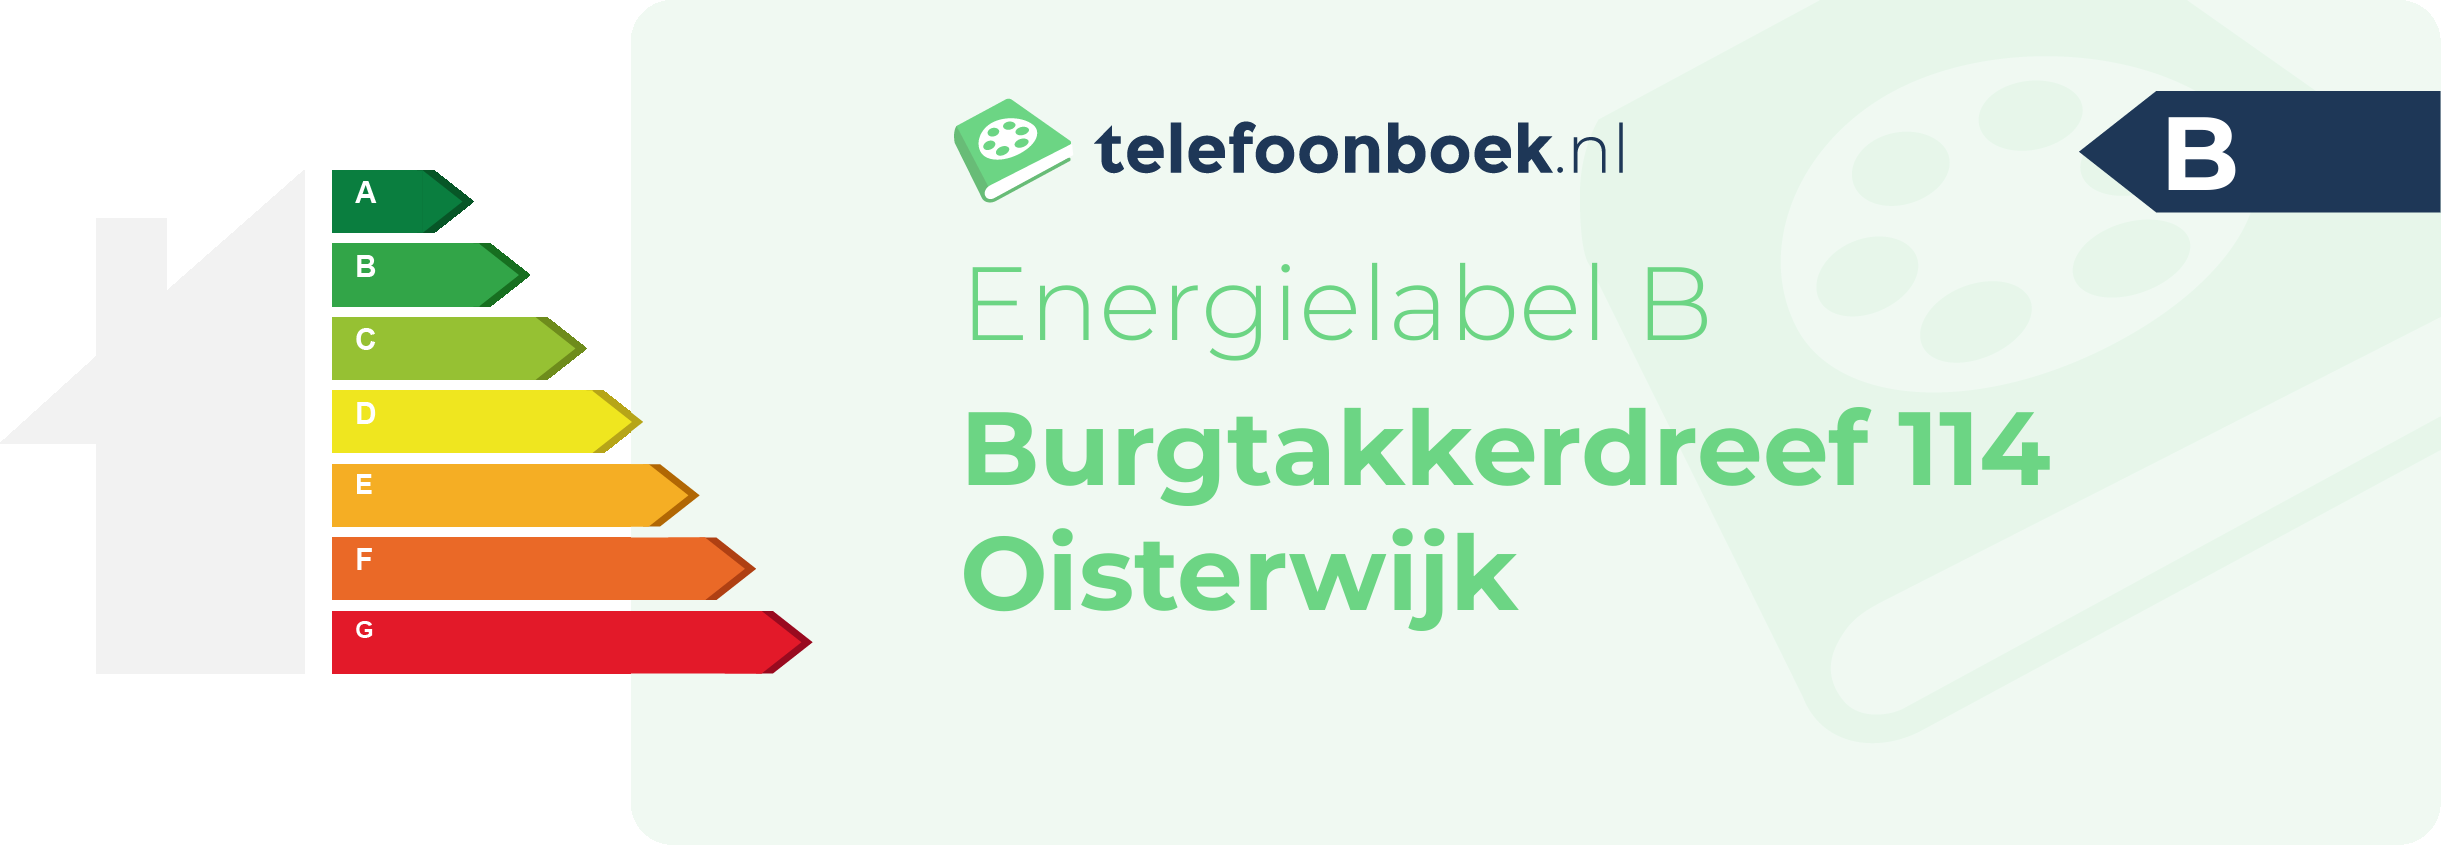 Energielabel Burgtakkerdreef 114 Oisterwijk